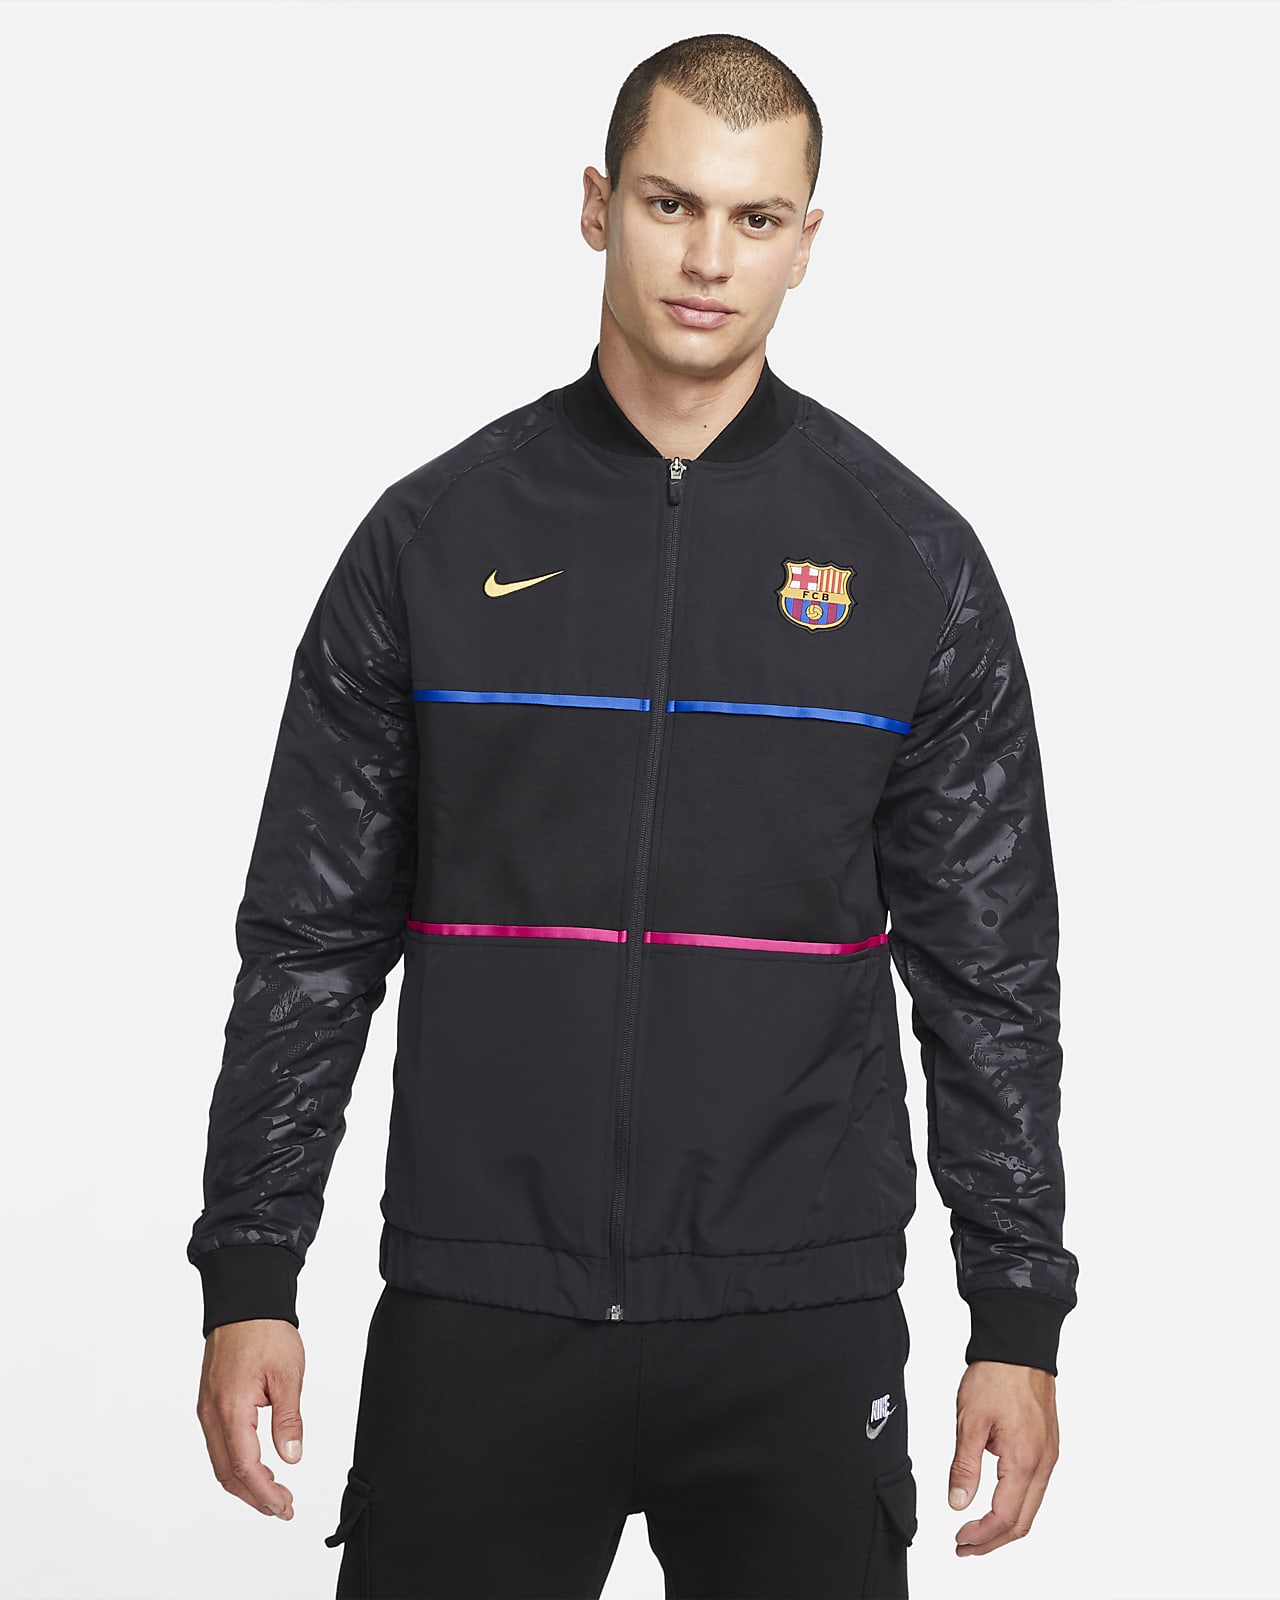 F.C. Barcelona Men's Nike Dri-FIT Football Tracksuit Jacket